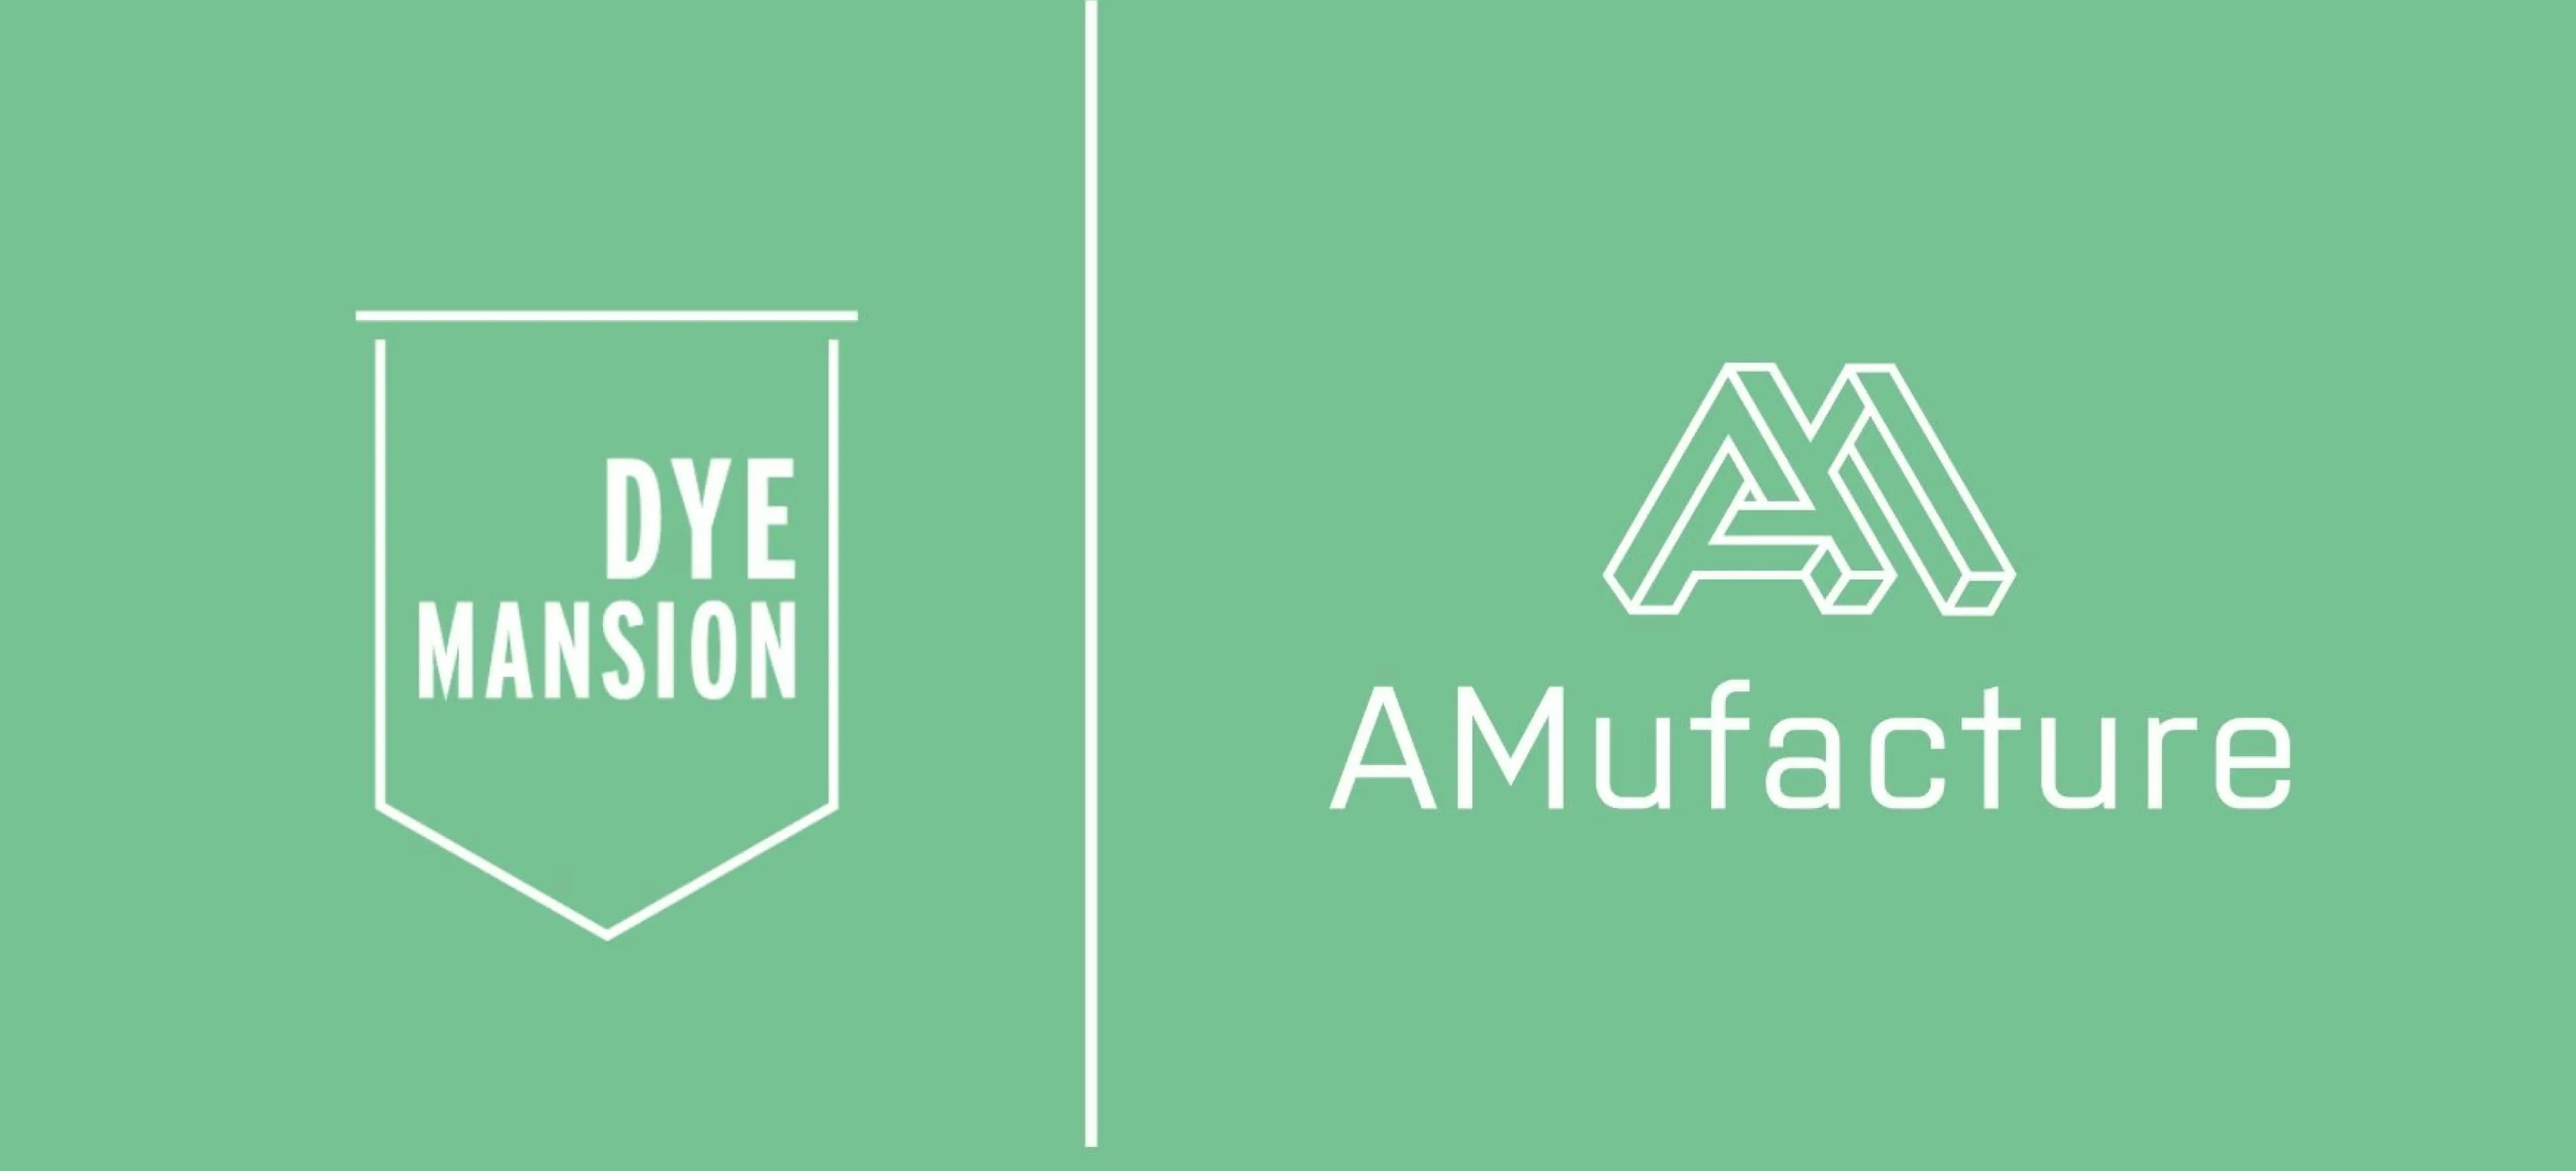 AMufacture DyeMansion production partnership